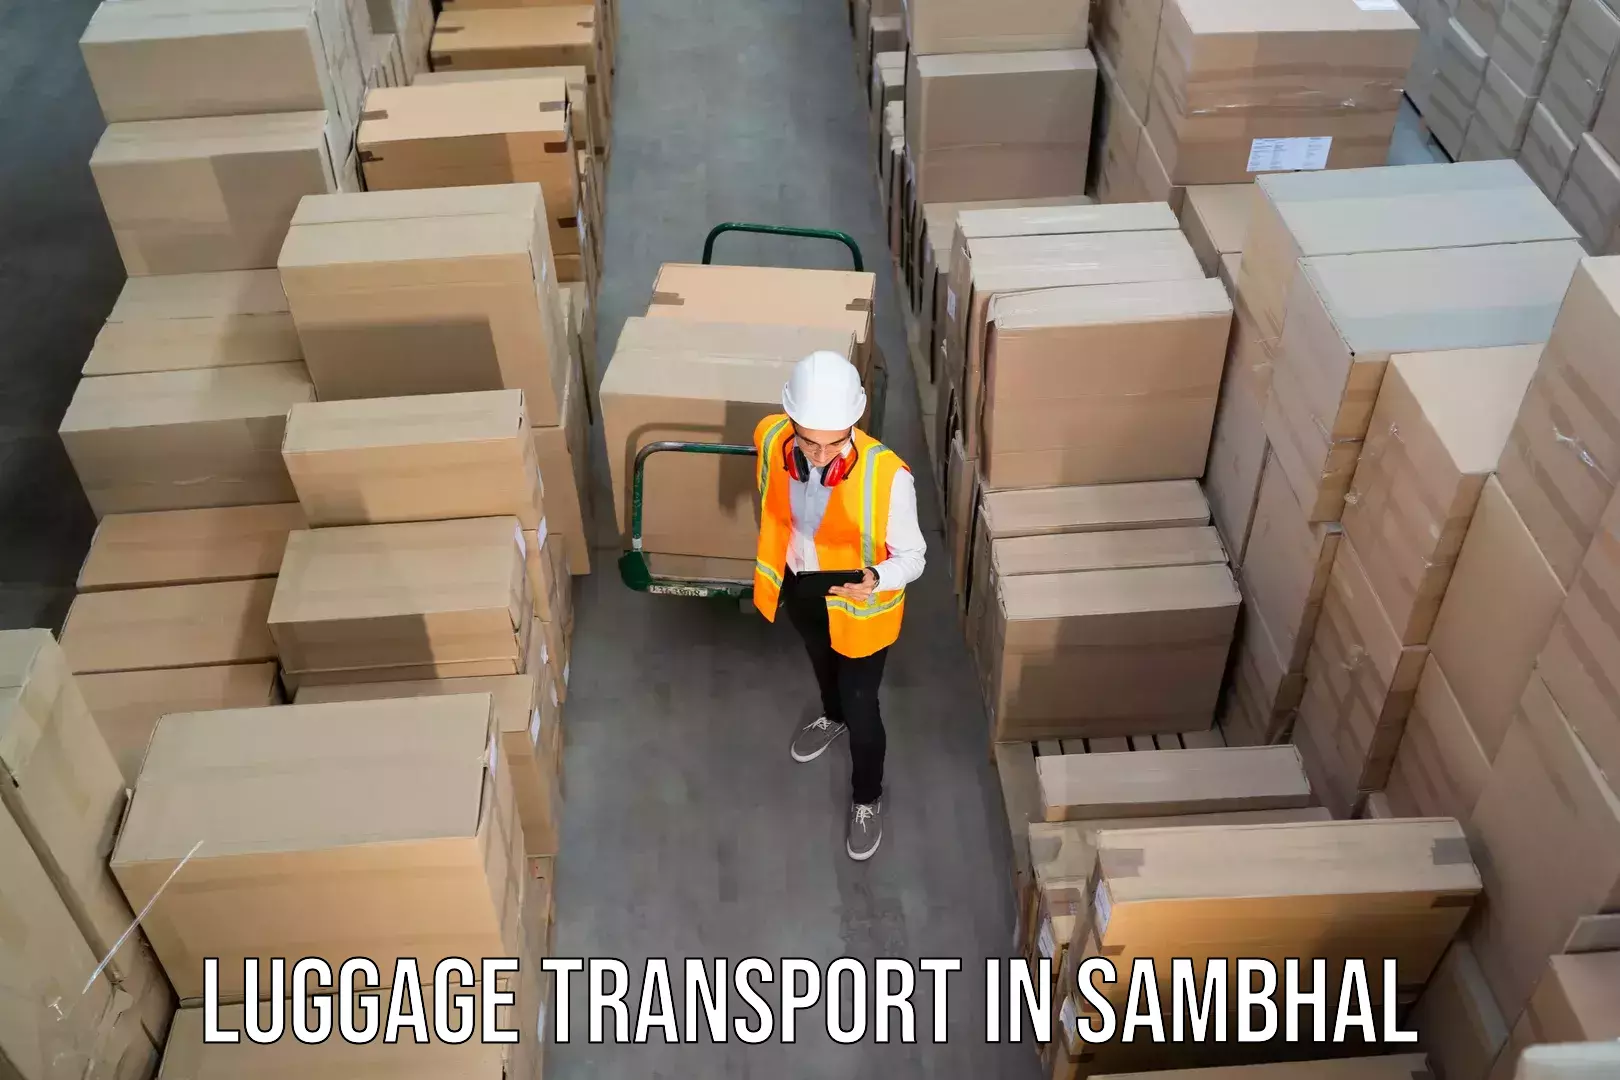 Professional baggage transport in Sambhal